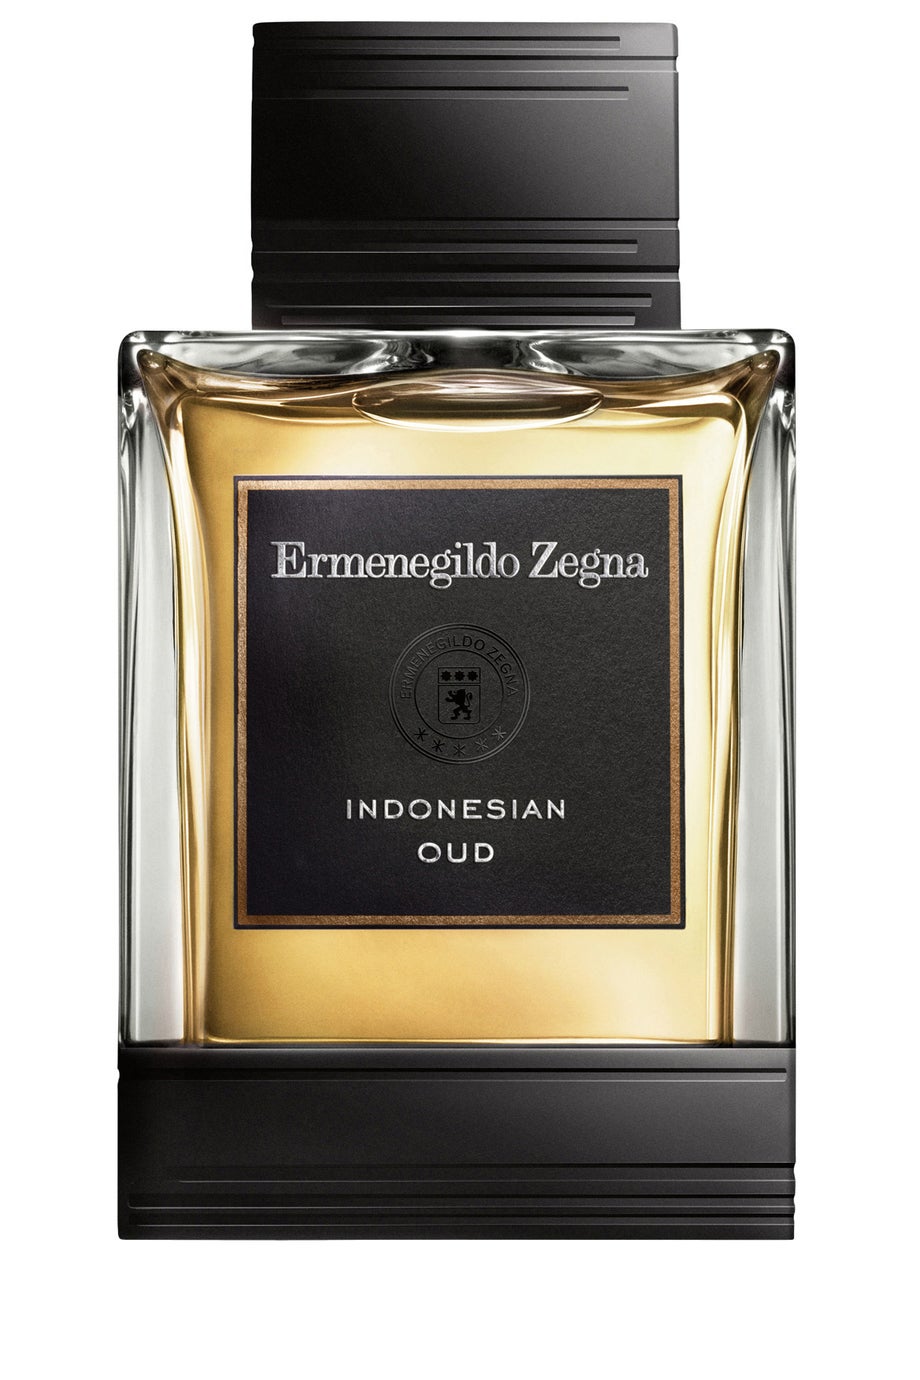 Ermenegildo Zegna Essenze Collection Indonesian Oud 125ml EDT Men's Cologne